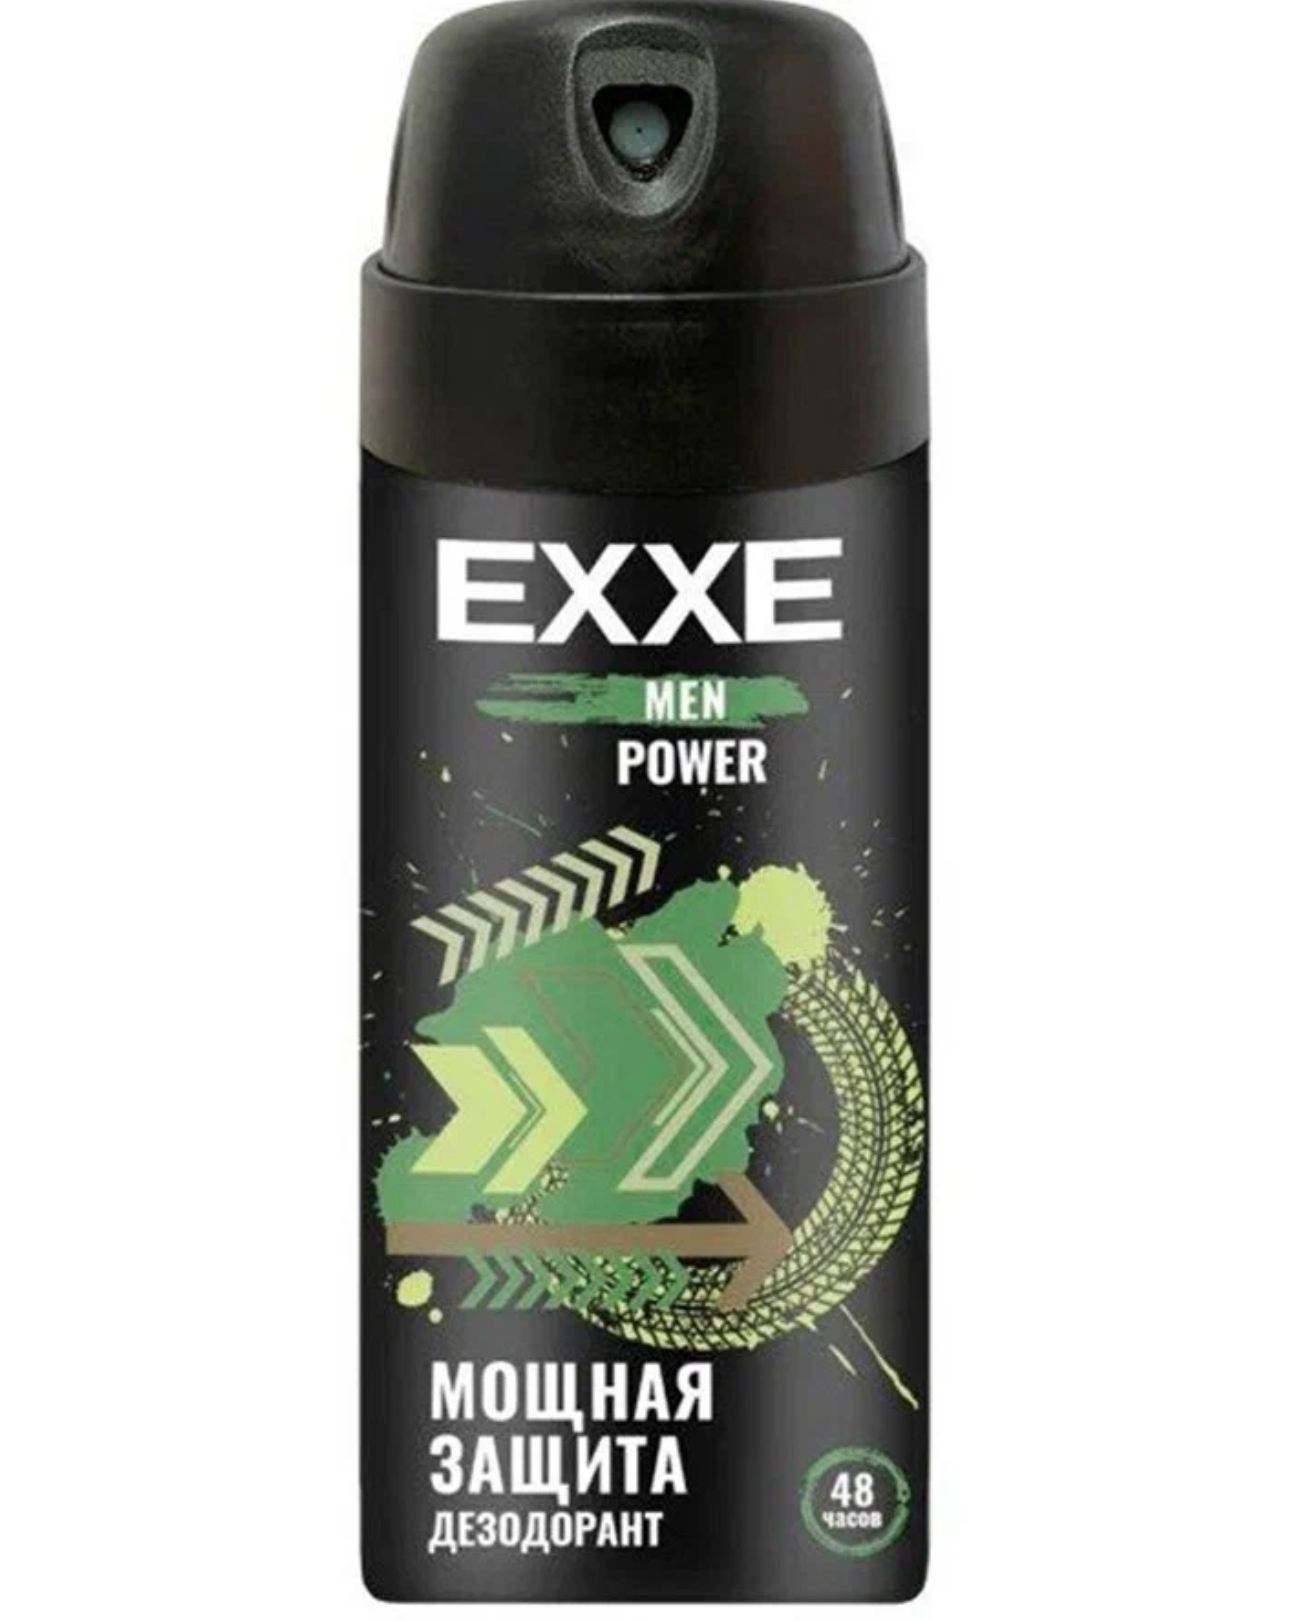   / EXXE men - -     Power 48 150 